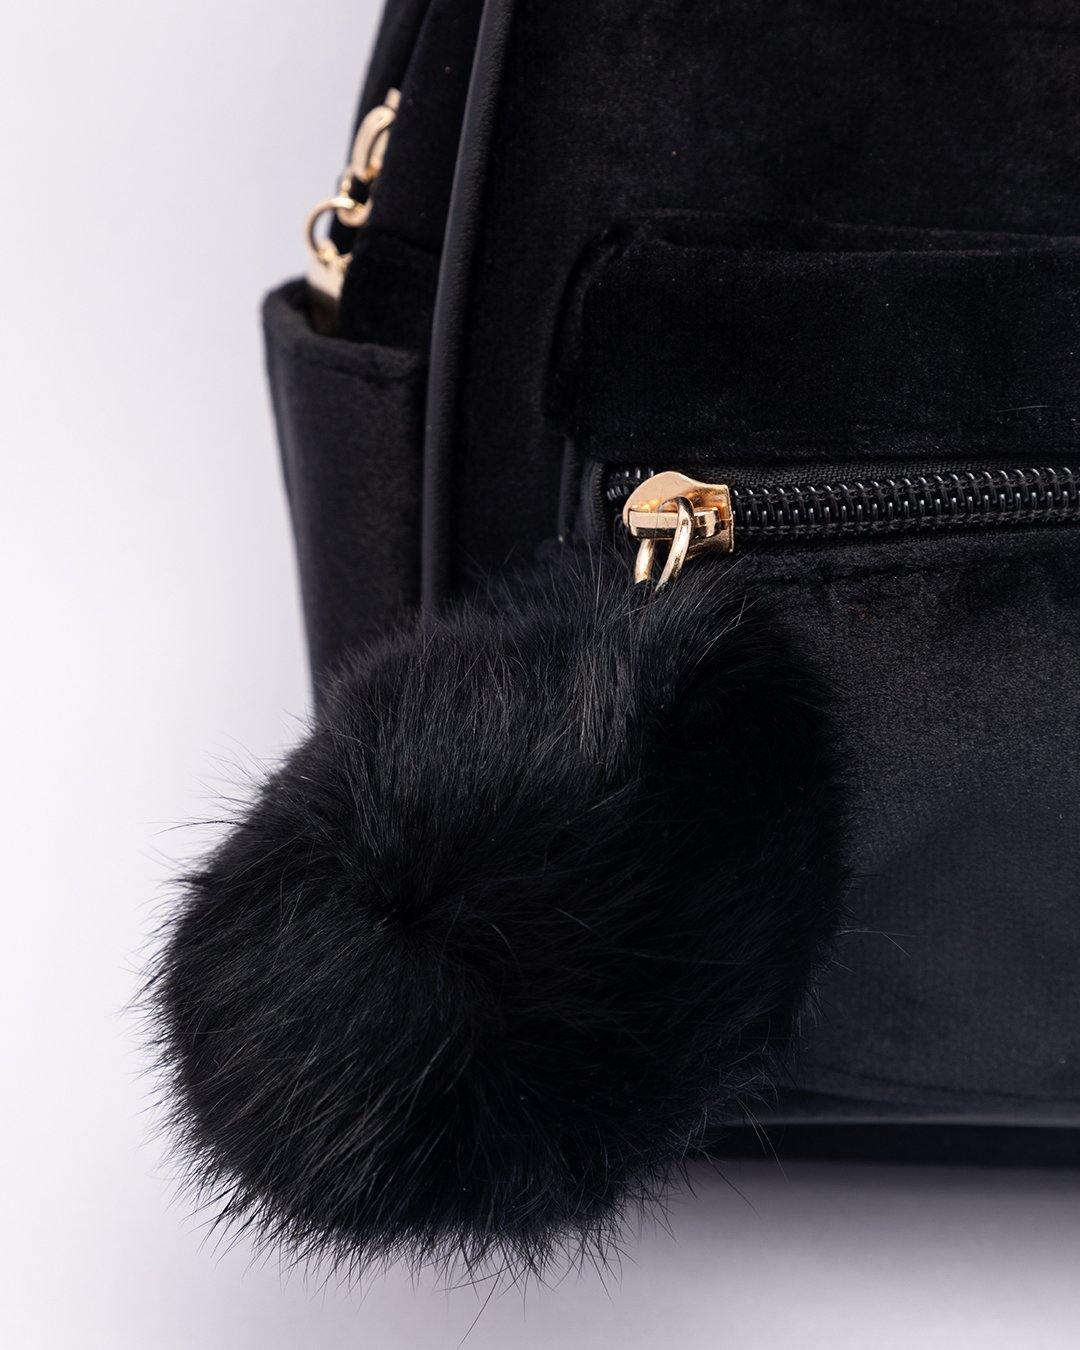 Bag, Handbag, Black, Rexine - MARKET 99